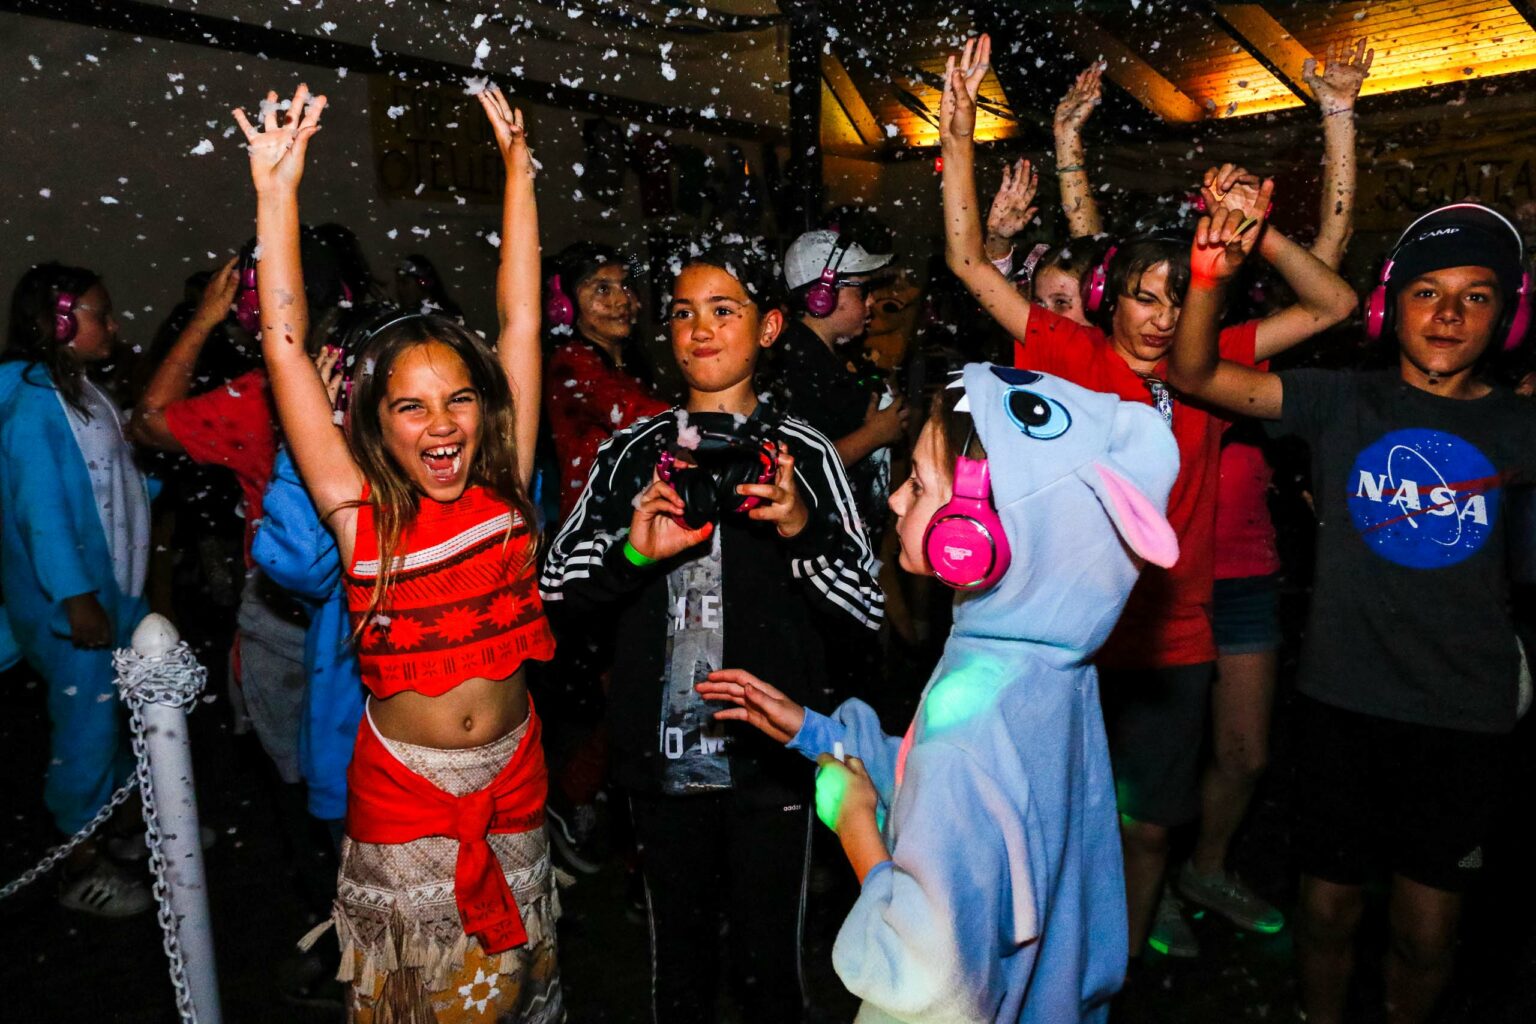 Kids in costumes cheering.